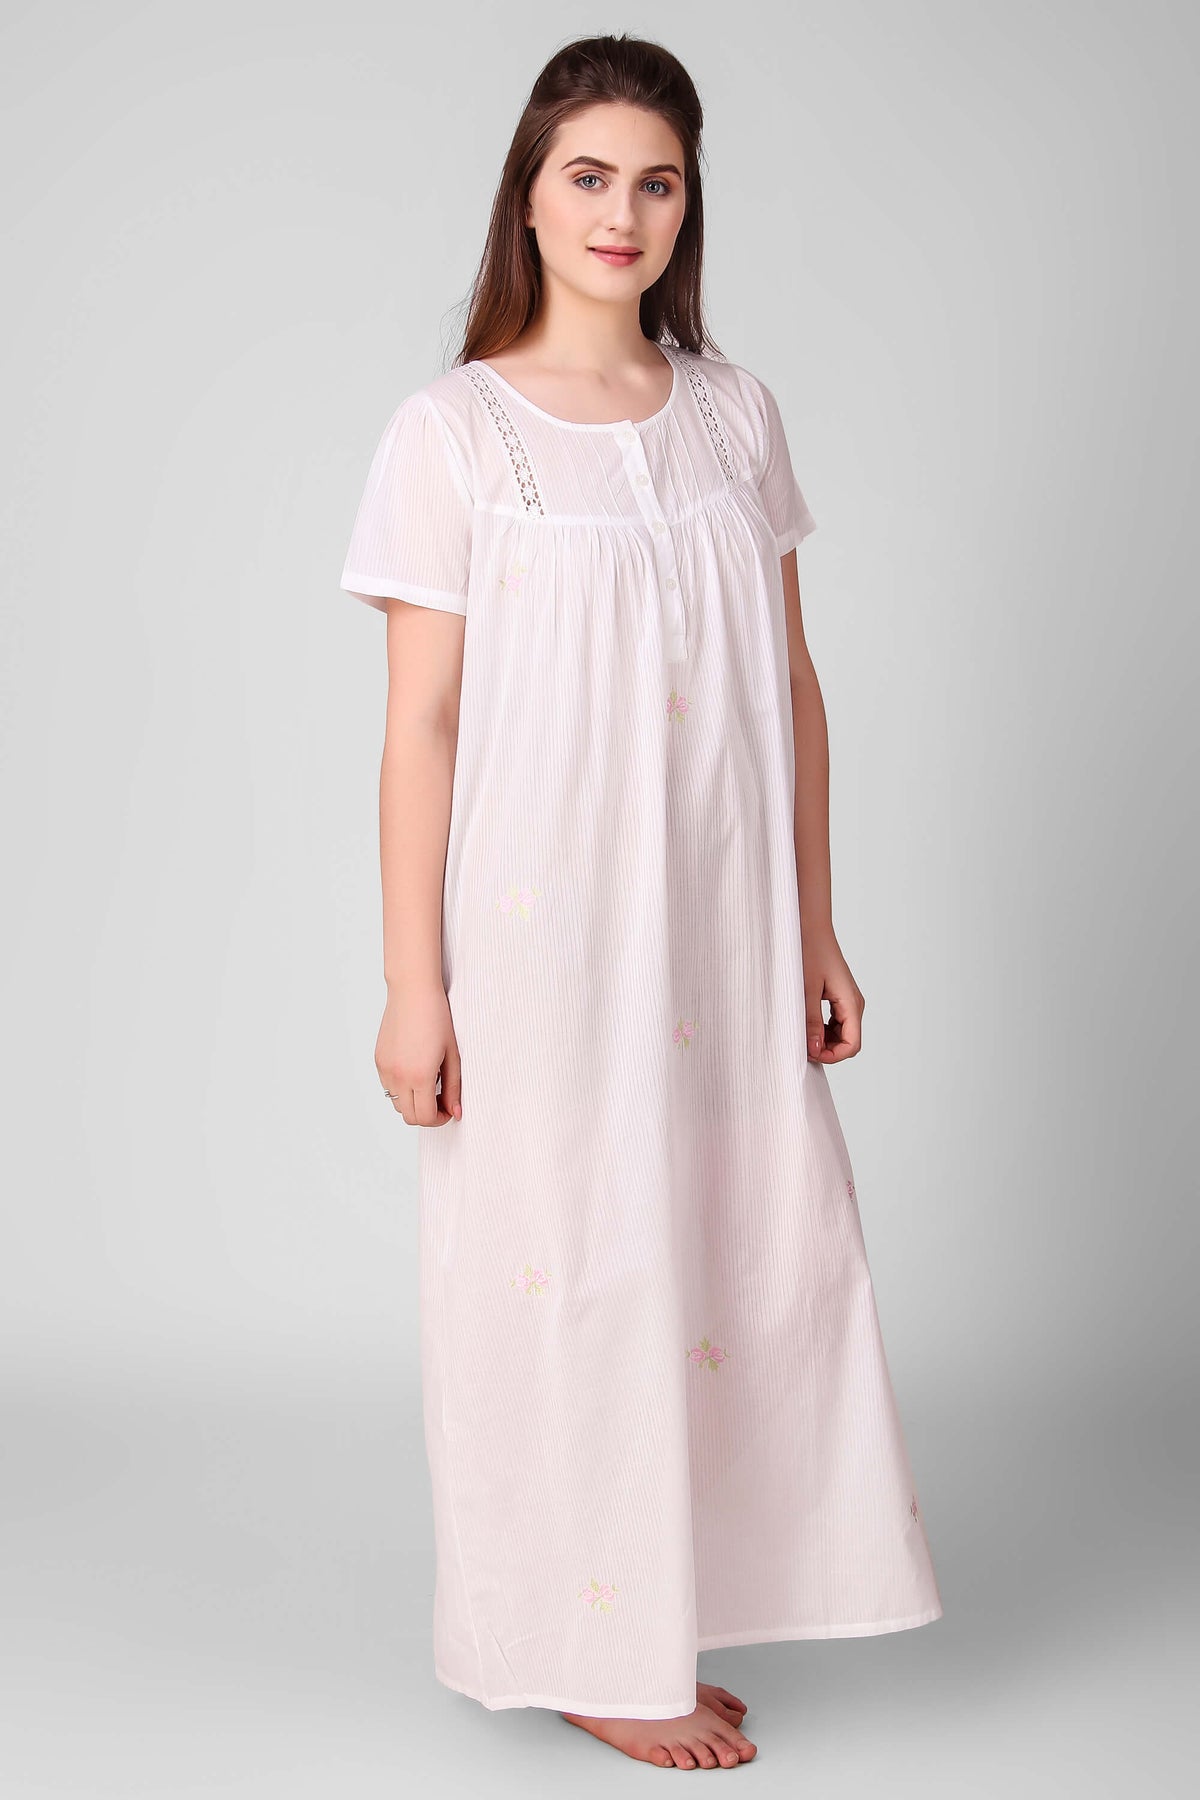 N/A Women Cotton Pijamas Sleep Night Dress Lace Fairy Nightwear